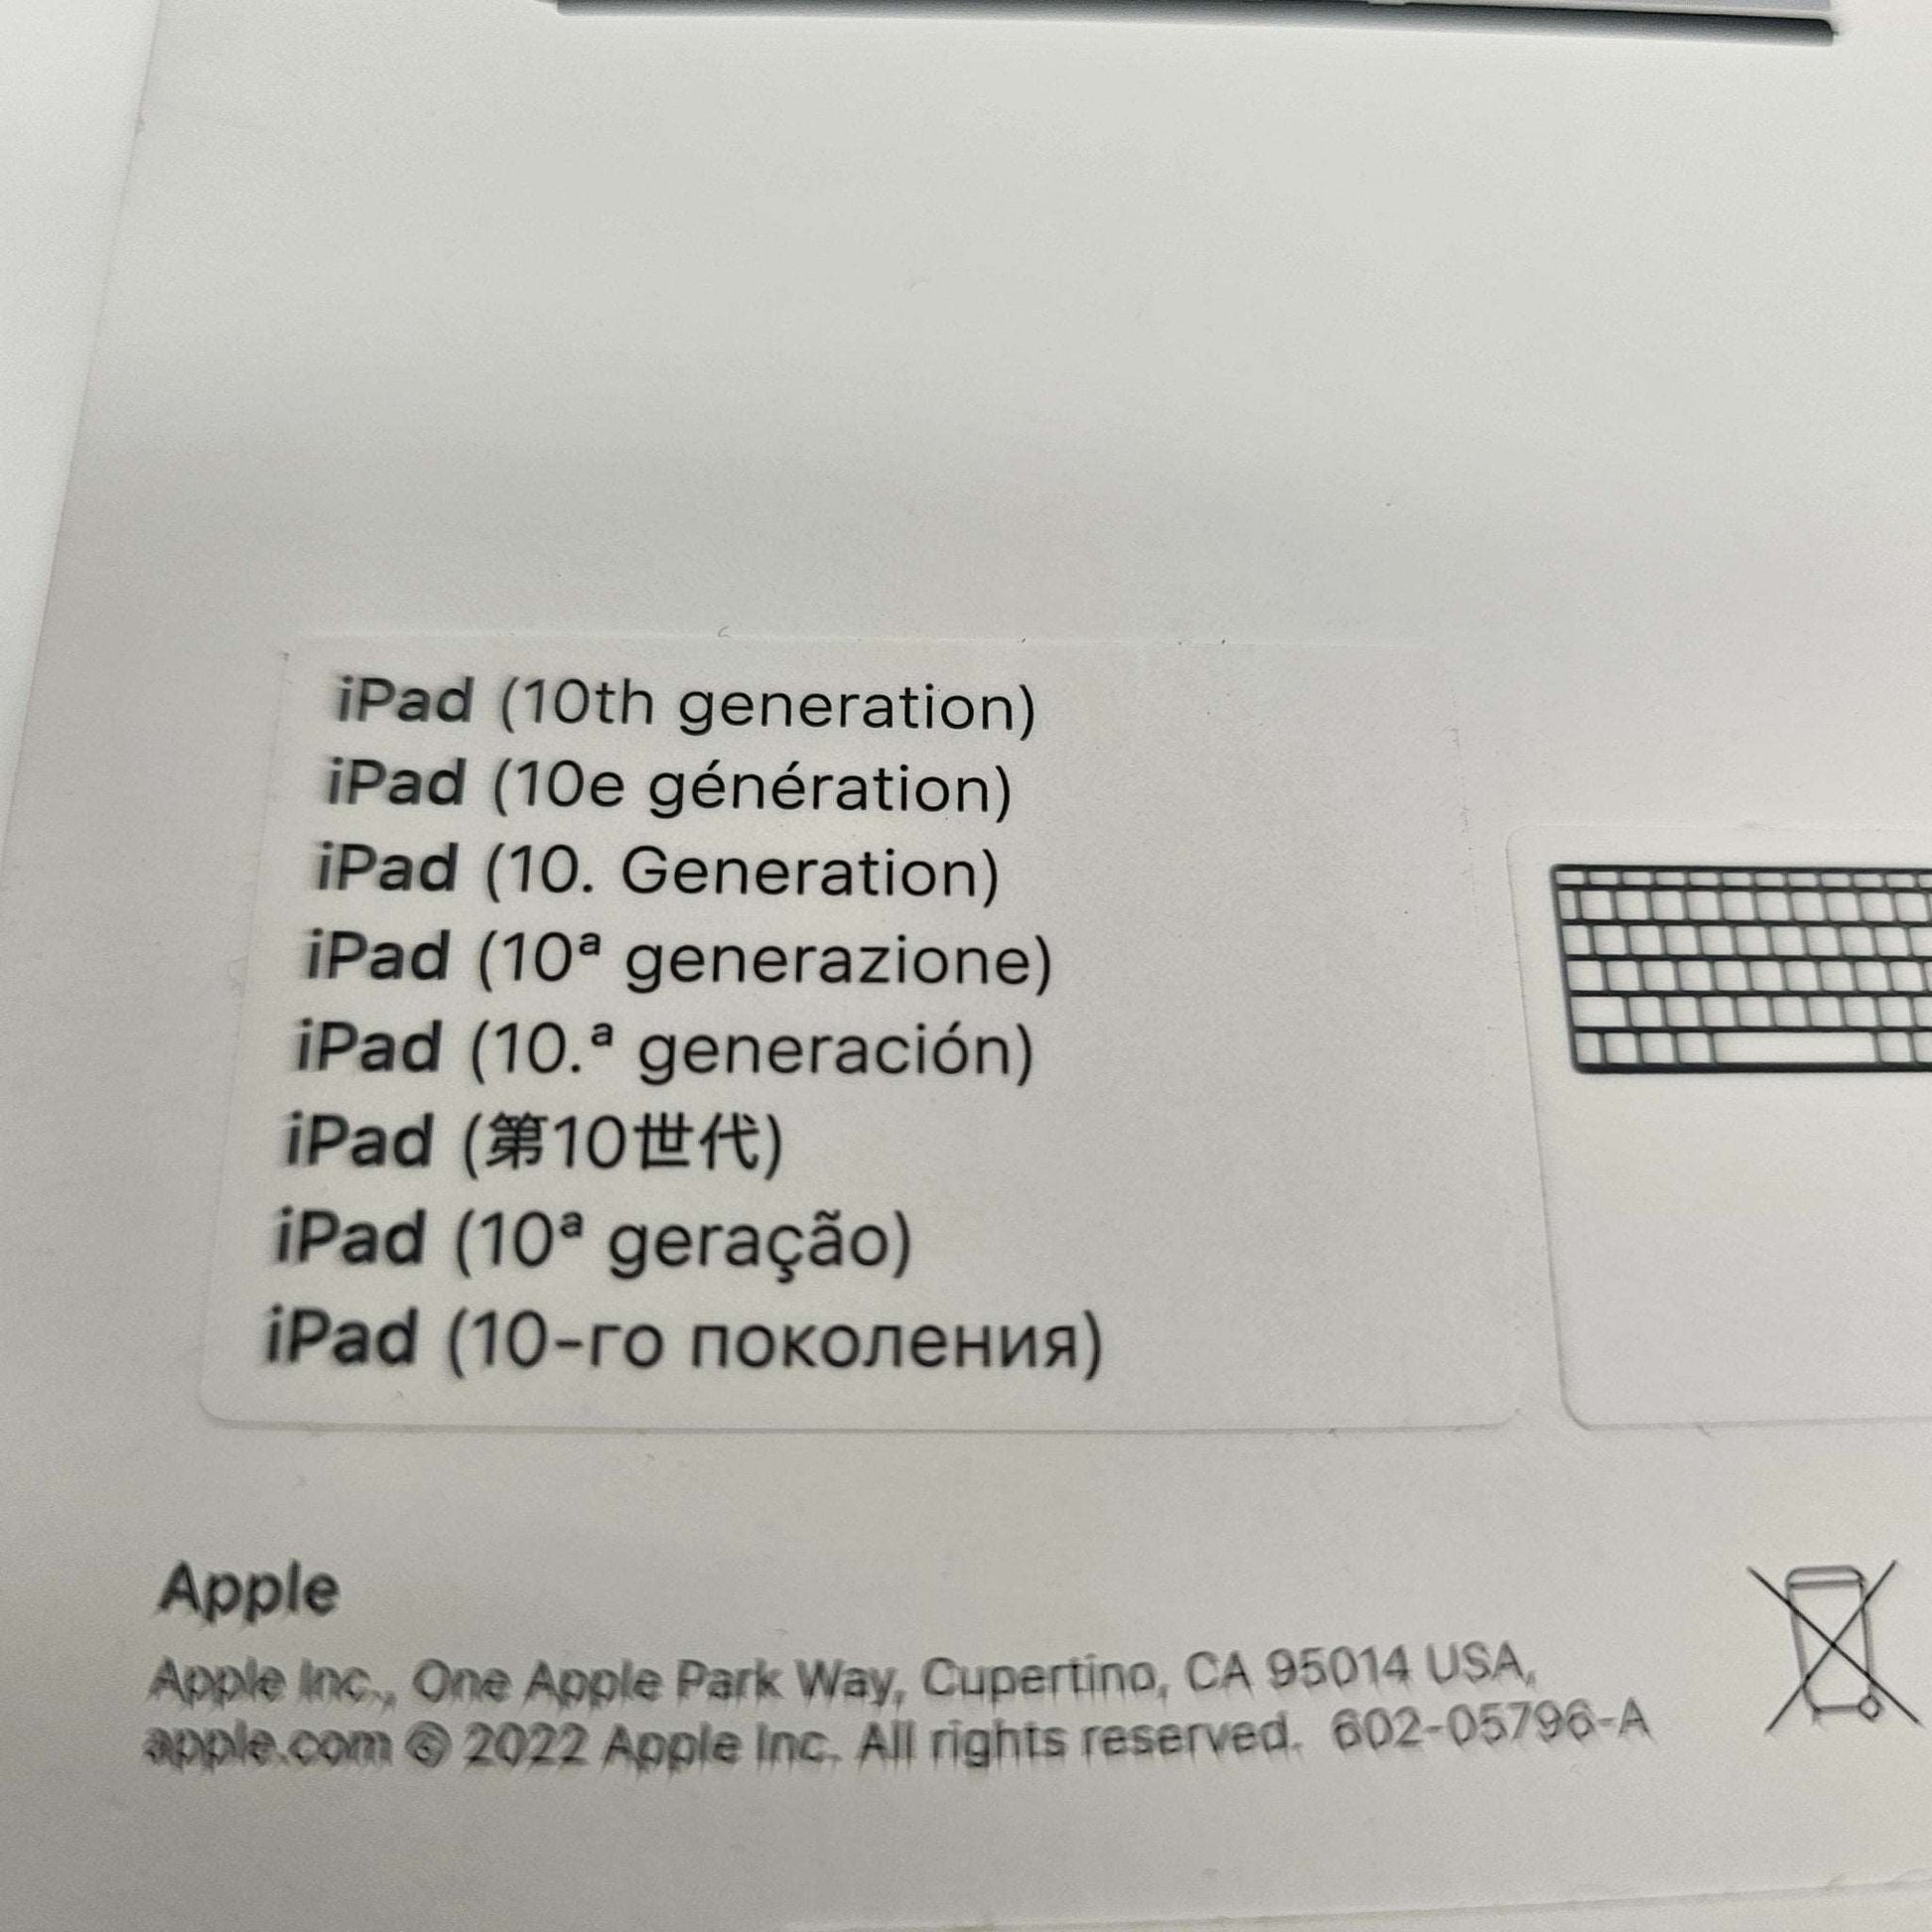 Apple Magic Keyboard Folio: iPad Keyboard and case for iPad (10th Generation) - DQ Distribution